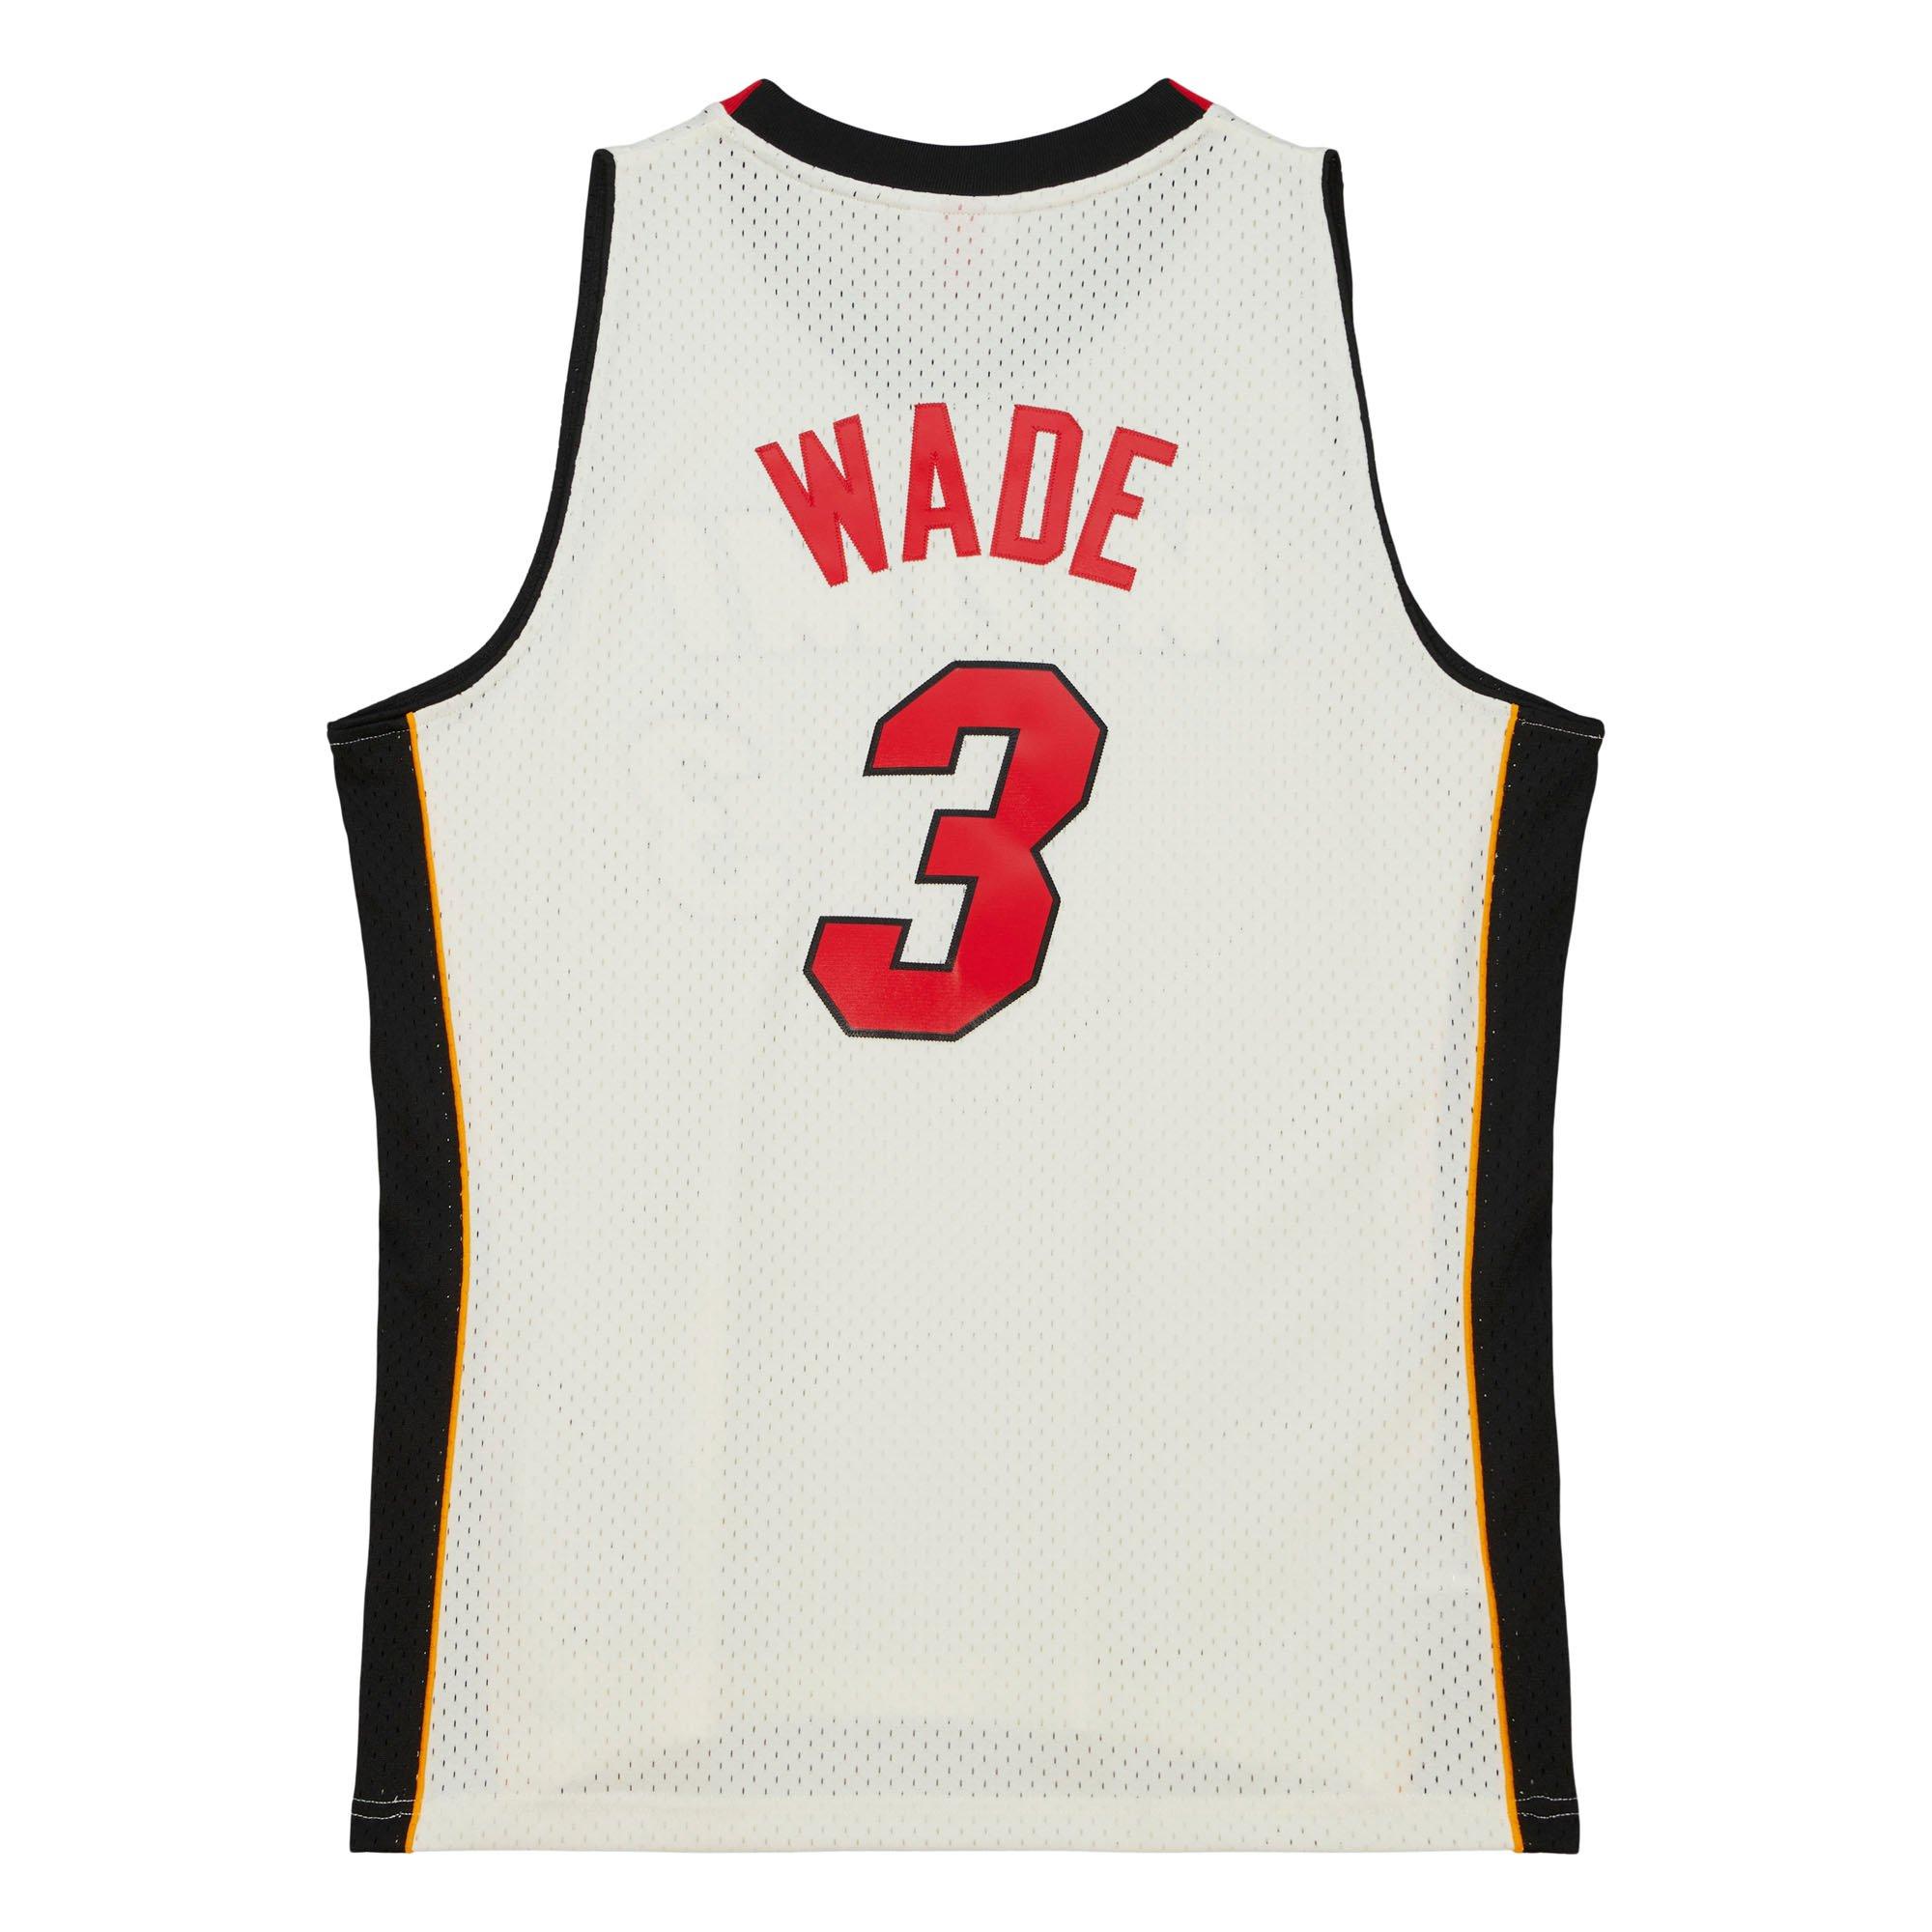 LeBron James 6 Miami Heat NBA Adidas Mens Jersey Black Red Sleeveless XL 50